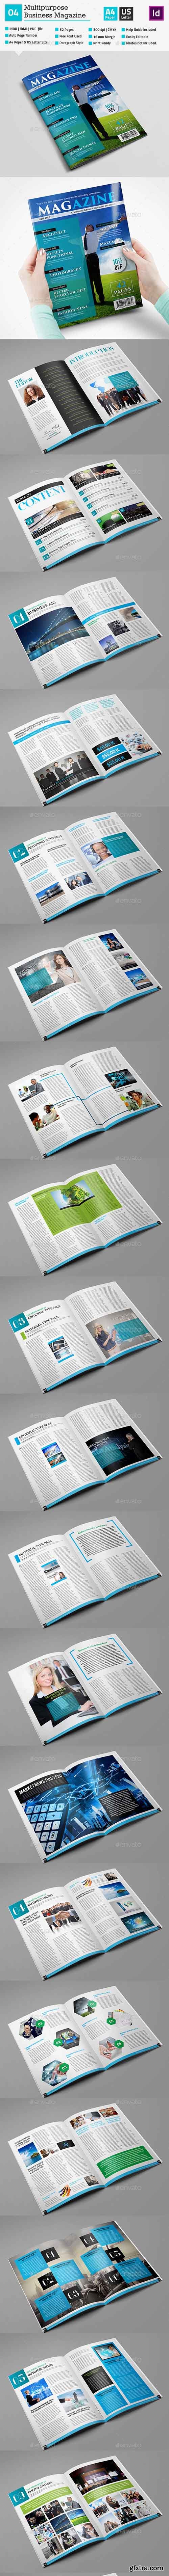 GR - Multipurpose Magazine Template_Indesign 52 Page_V4 10823679